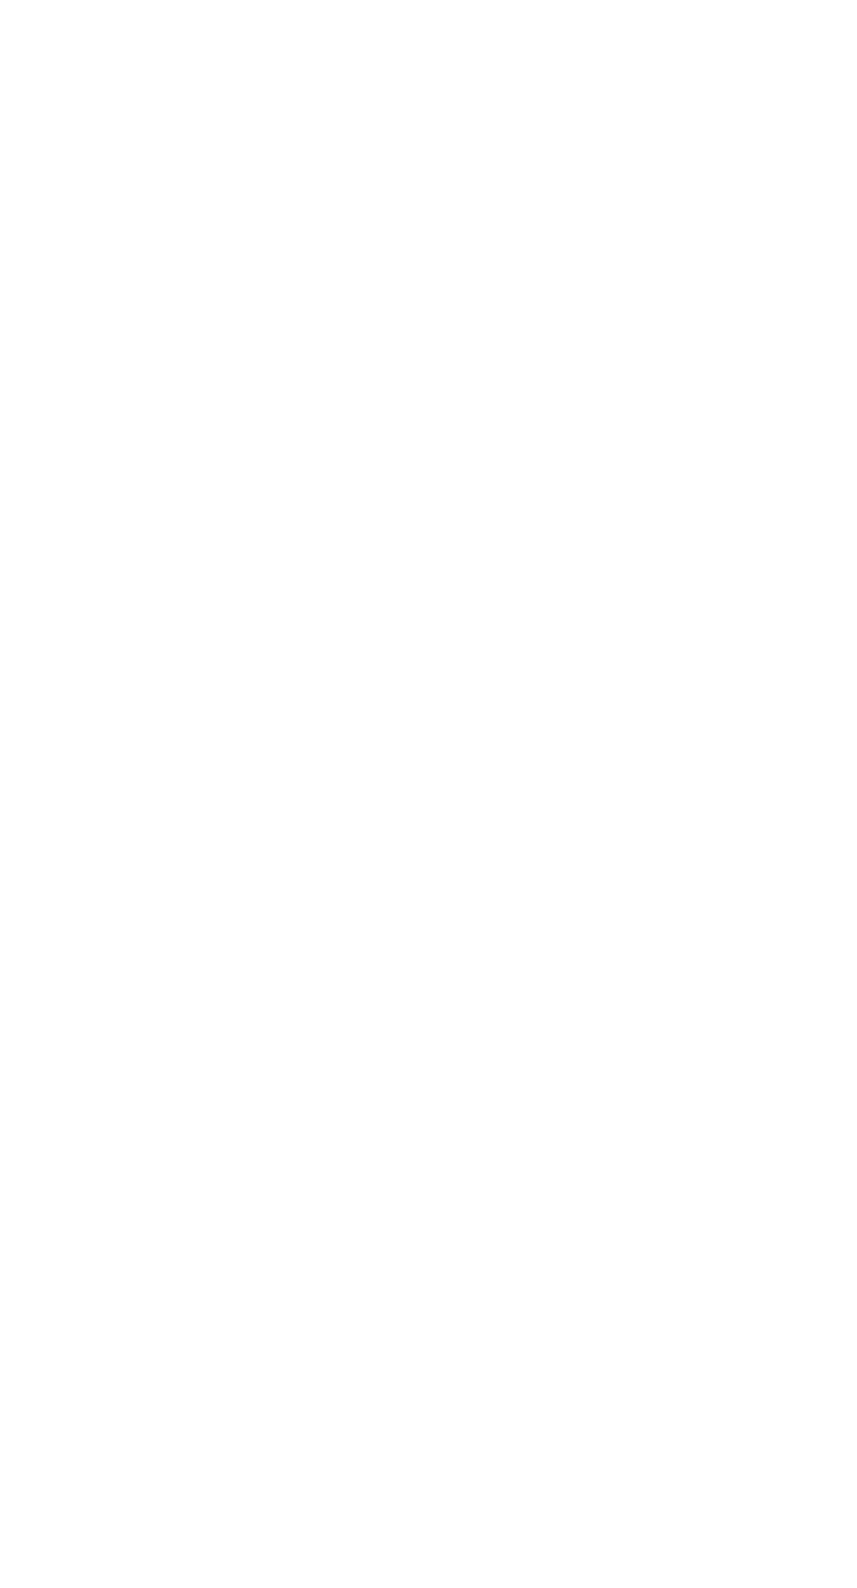 Rithm Capital logo for dark backgrounds (transparent PNG)